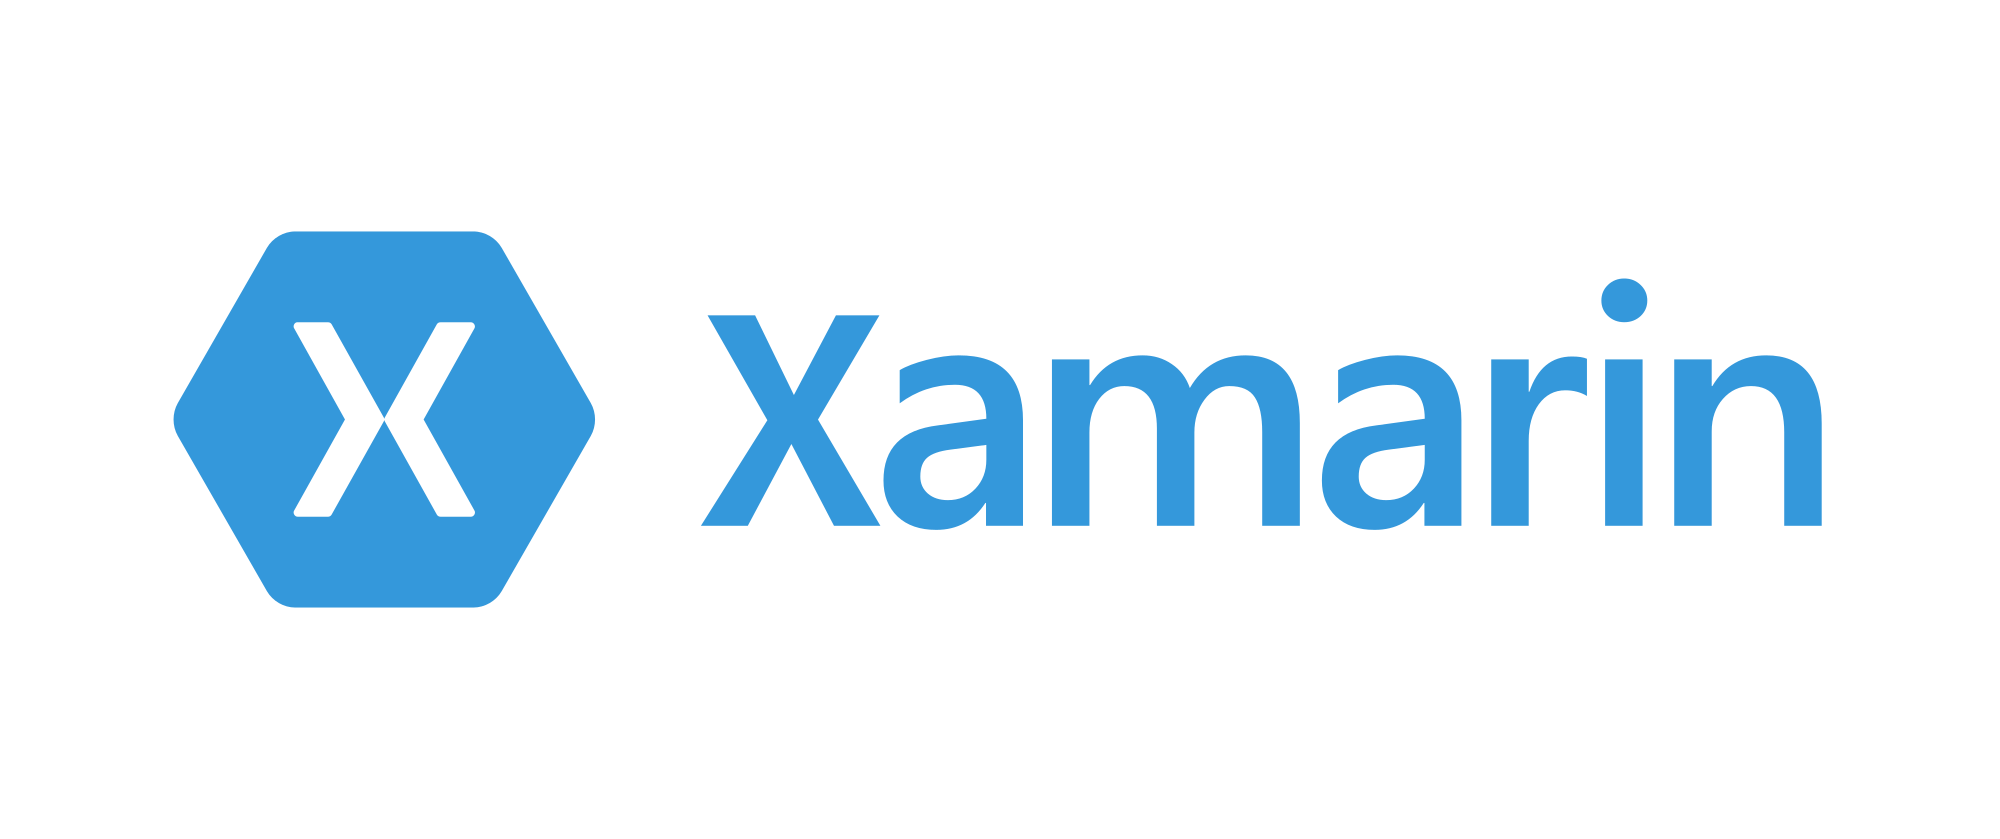 2000px-Xamarin-logo.svg